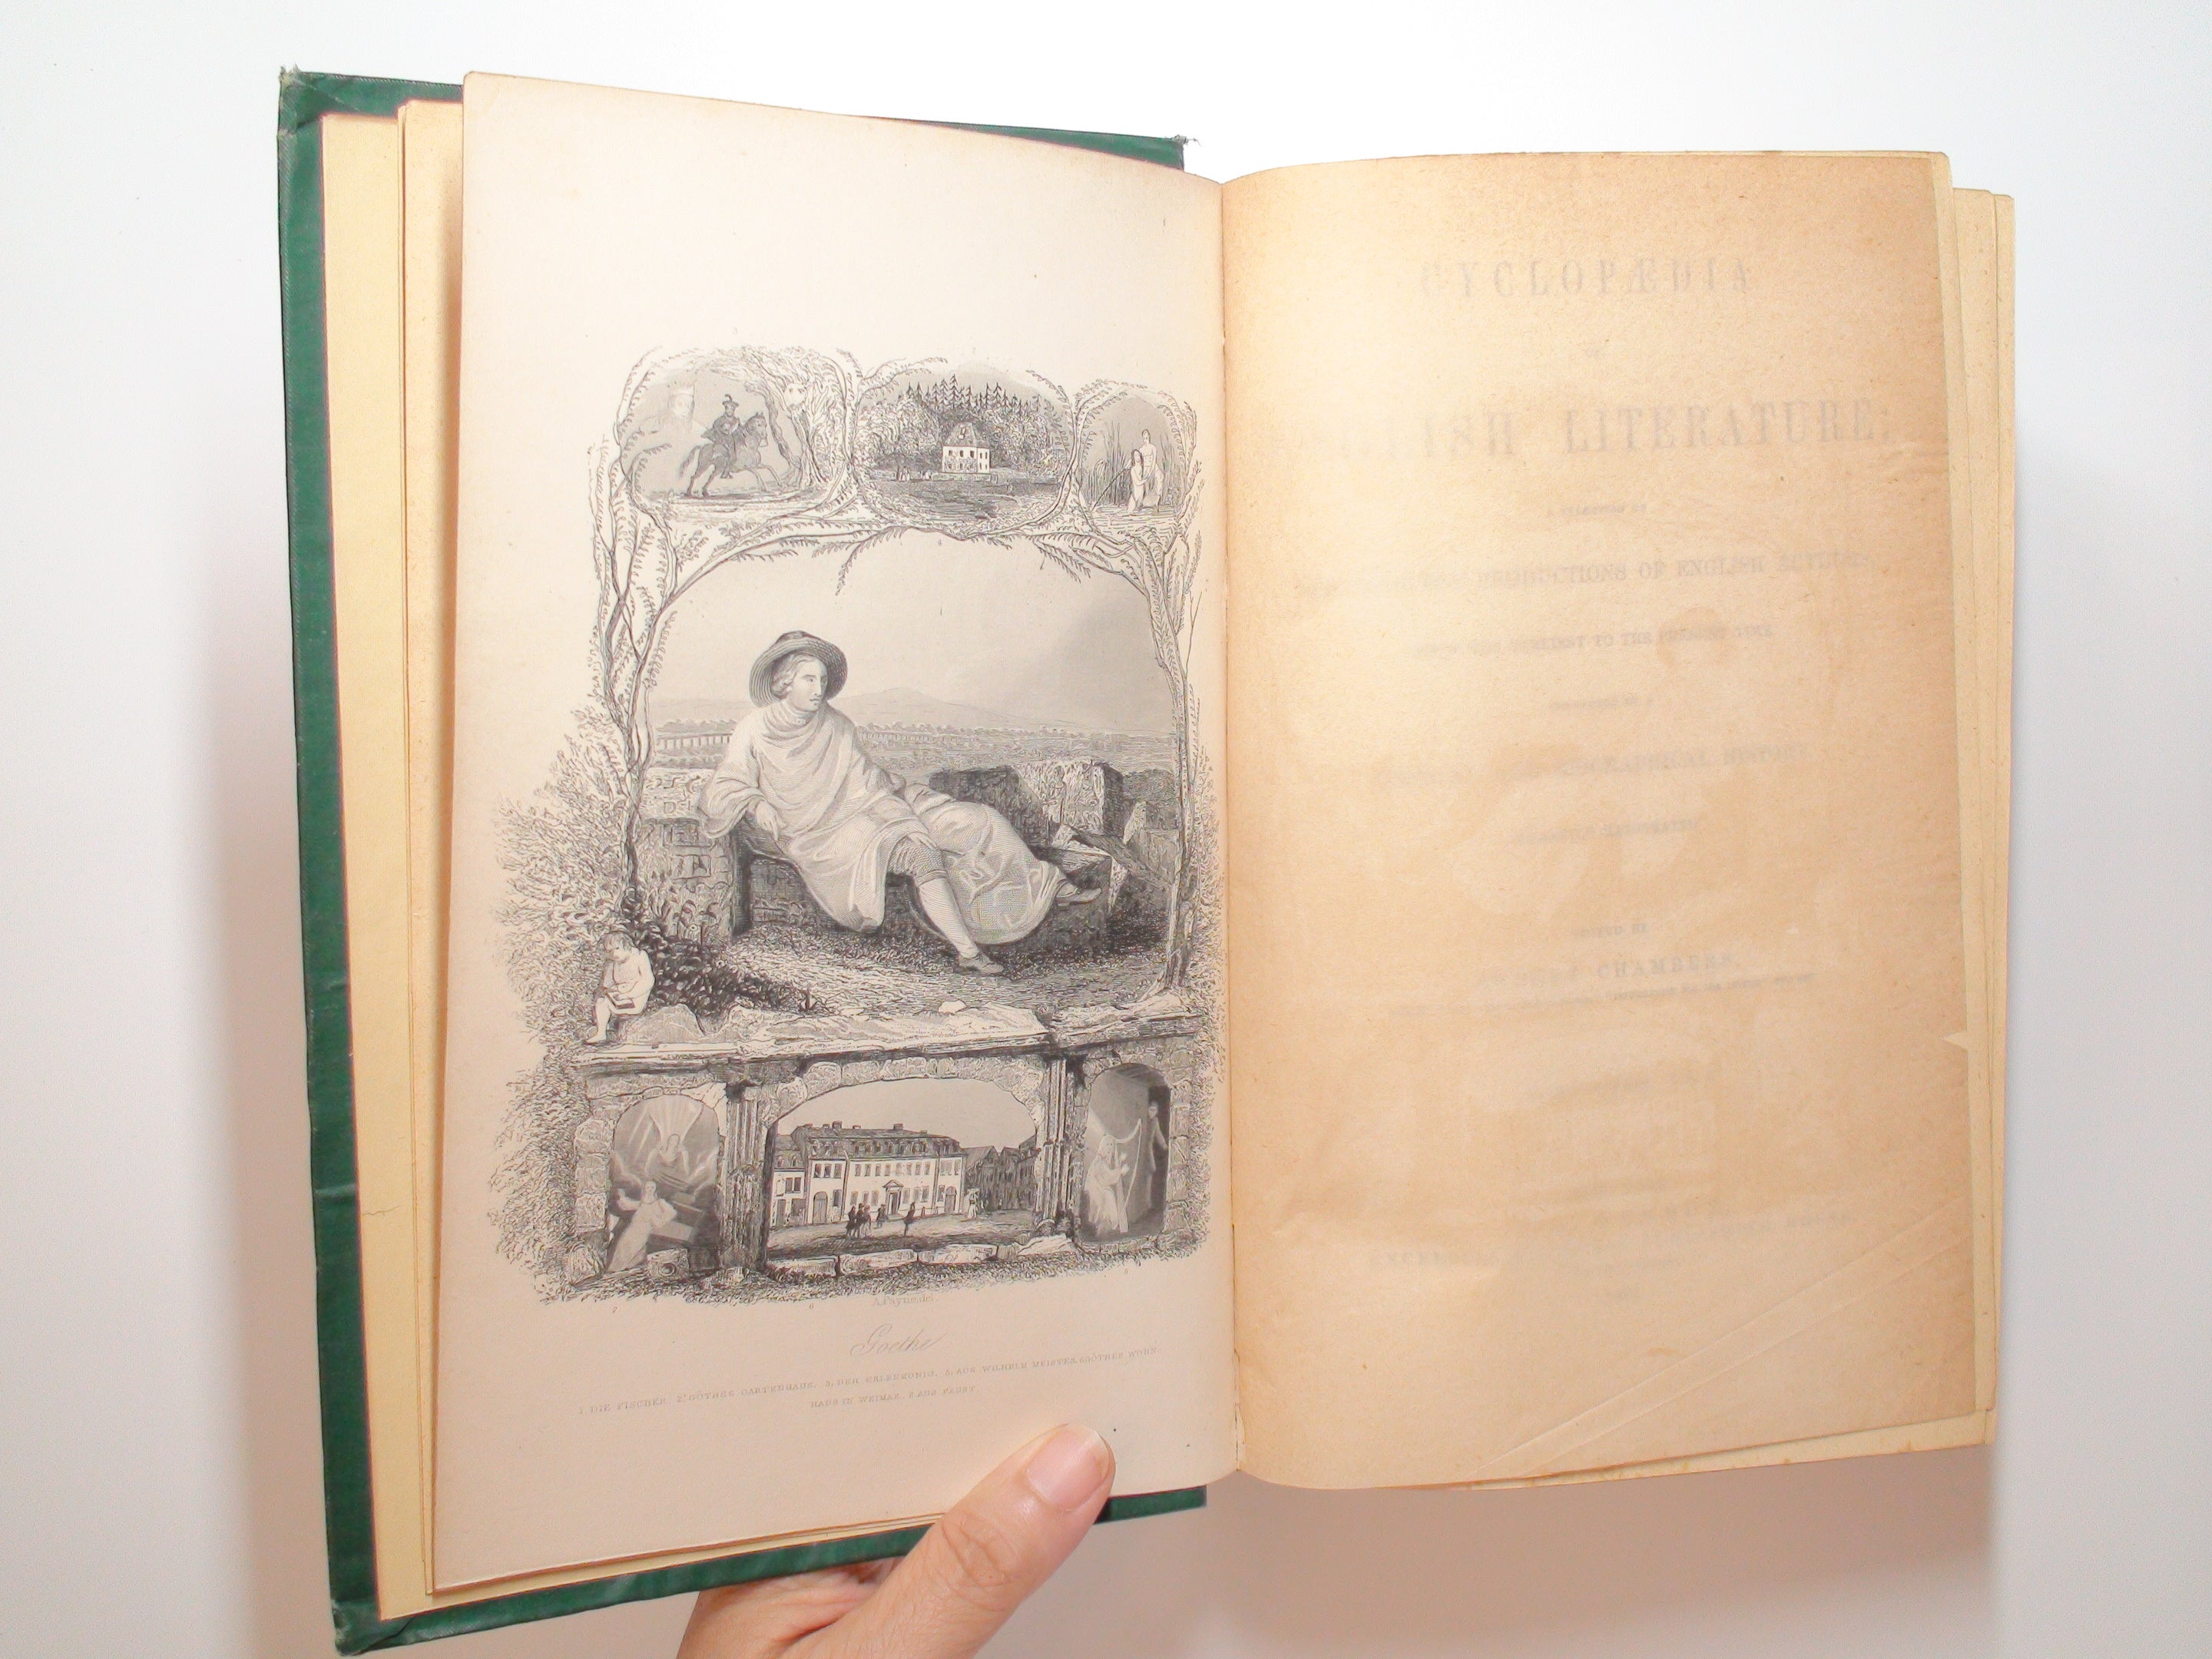 Cyclopedia of English Literature, by Robert Chambers, Illustrated, 1st Ed, 1882